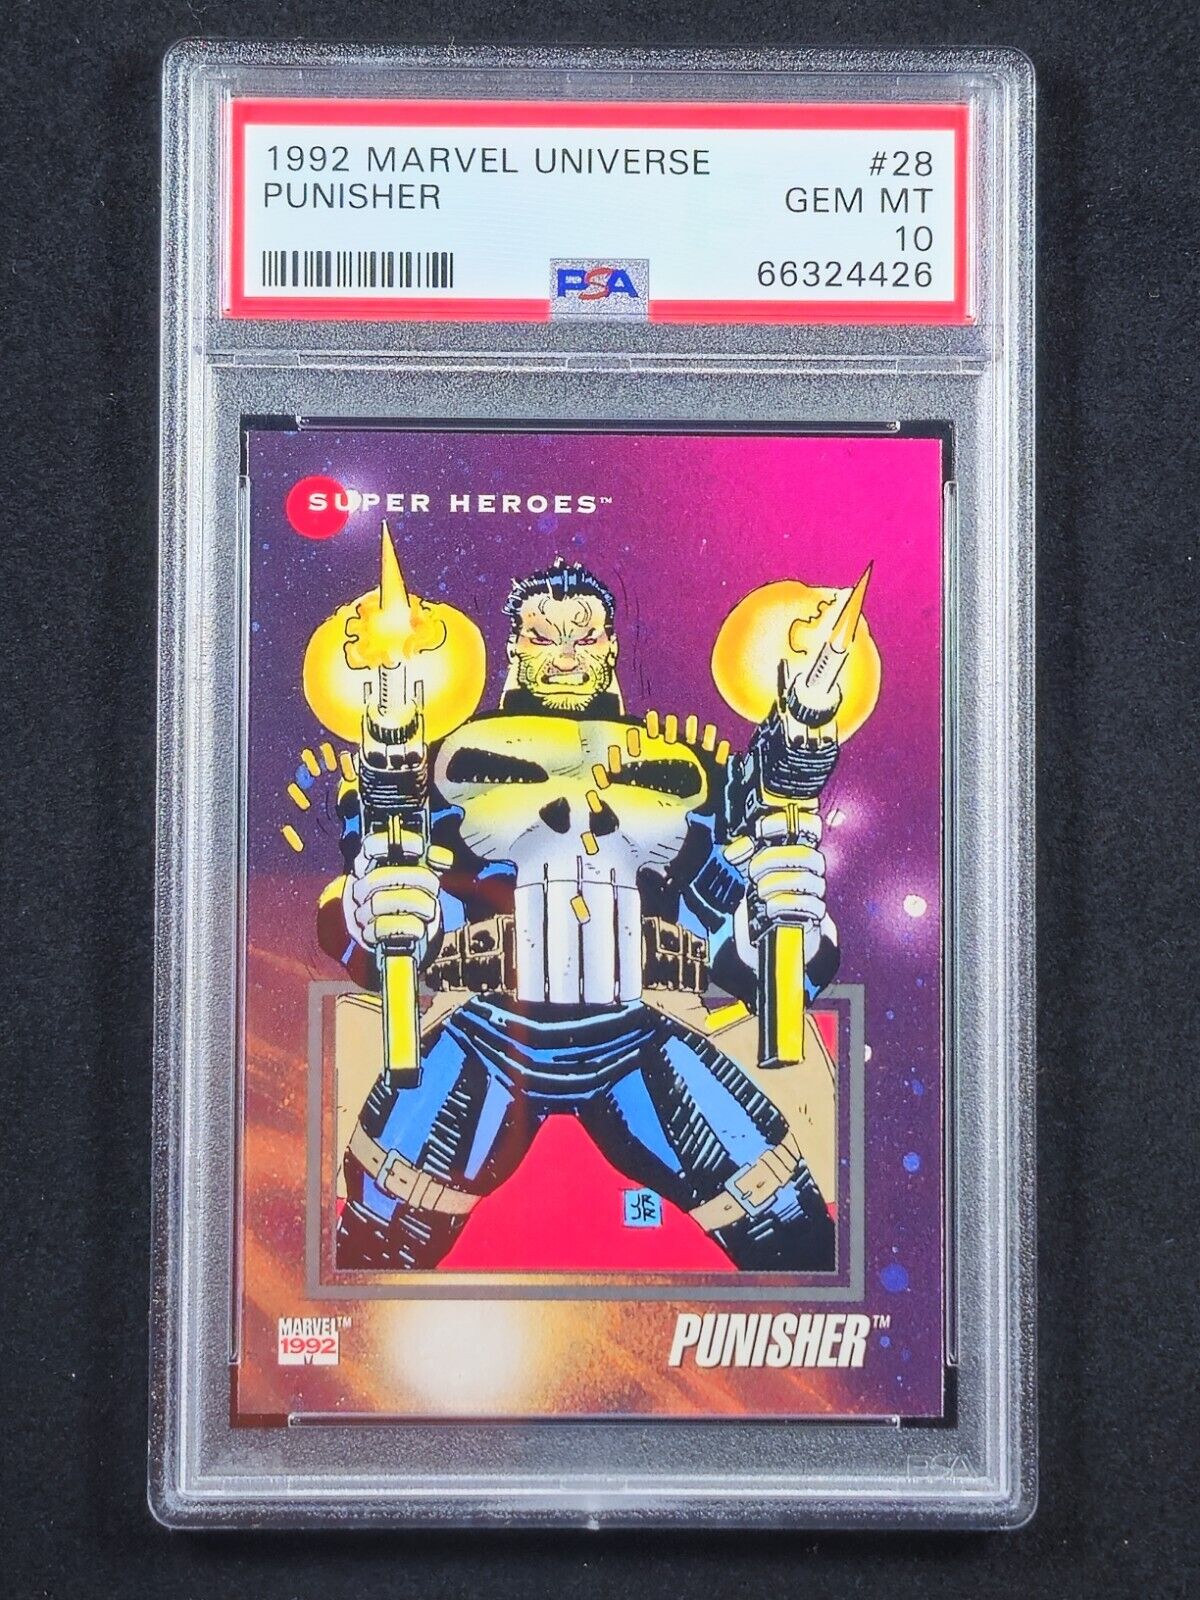 Punisher trading card graded PSA 10